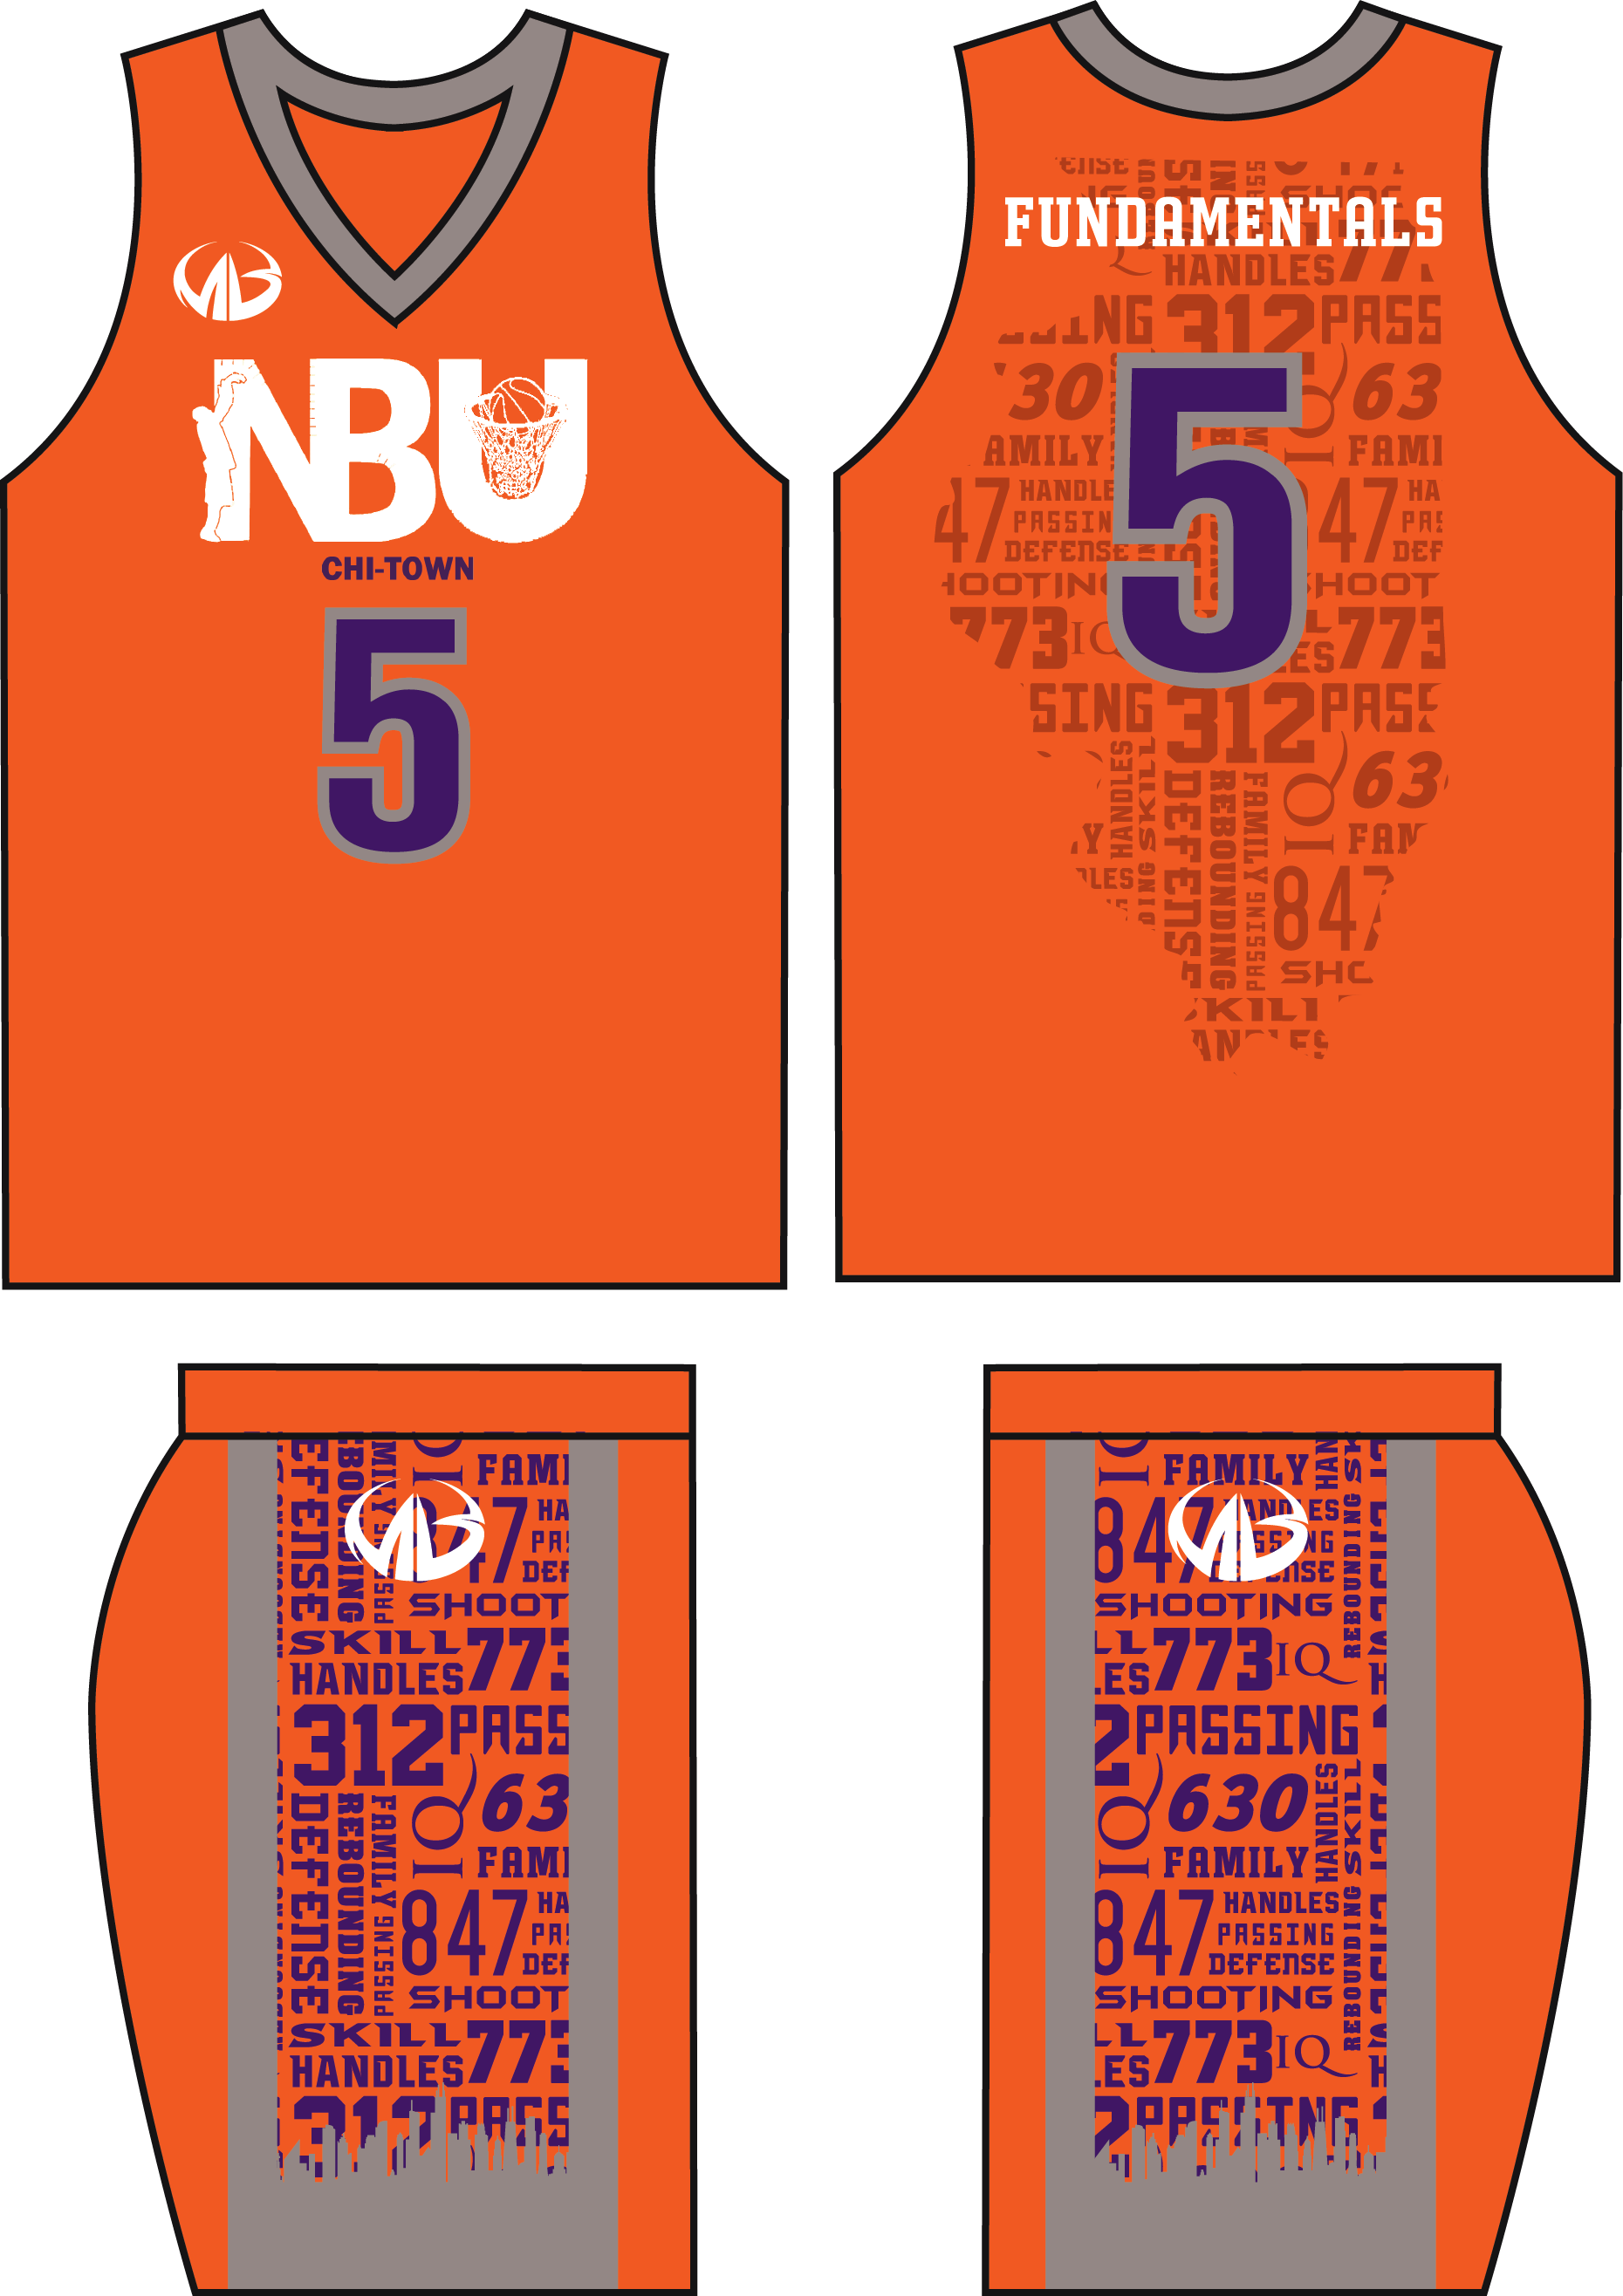 NBU Uniforms - Moneyball Sportswear